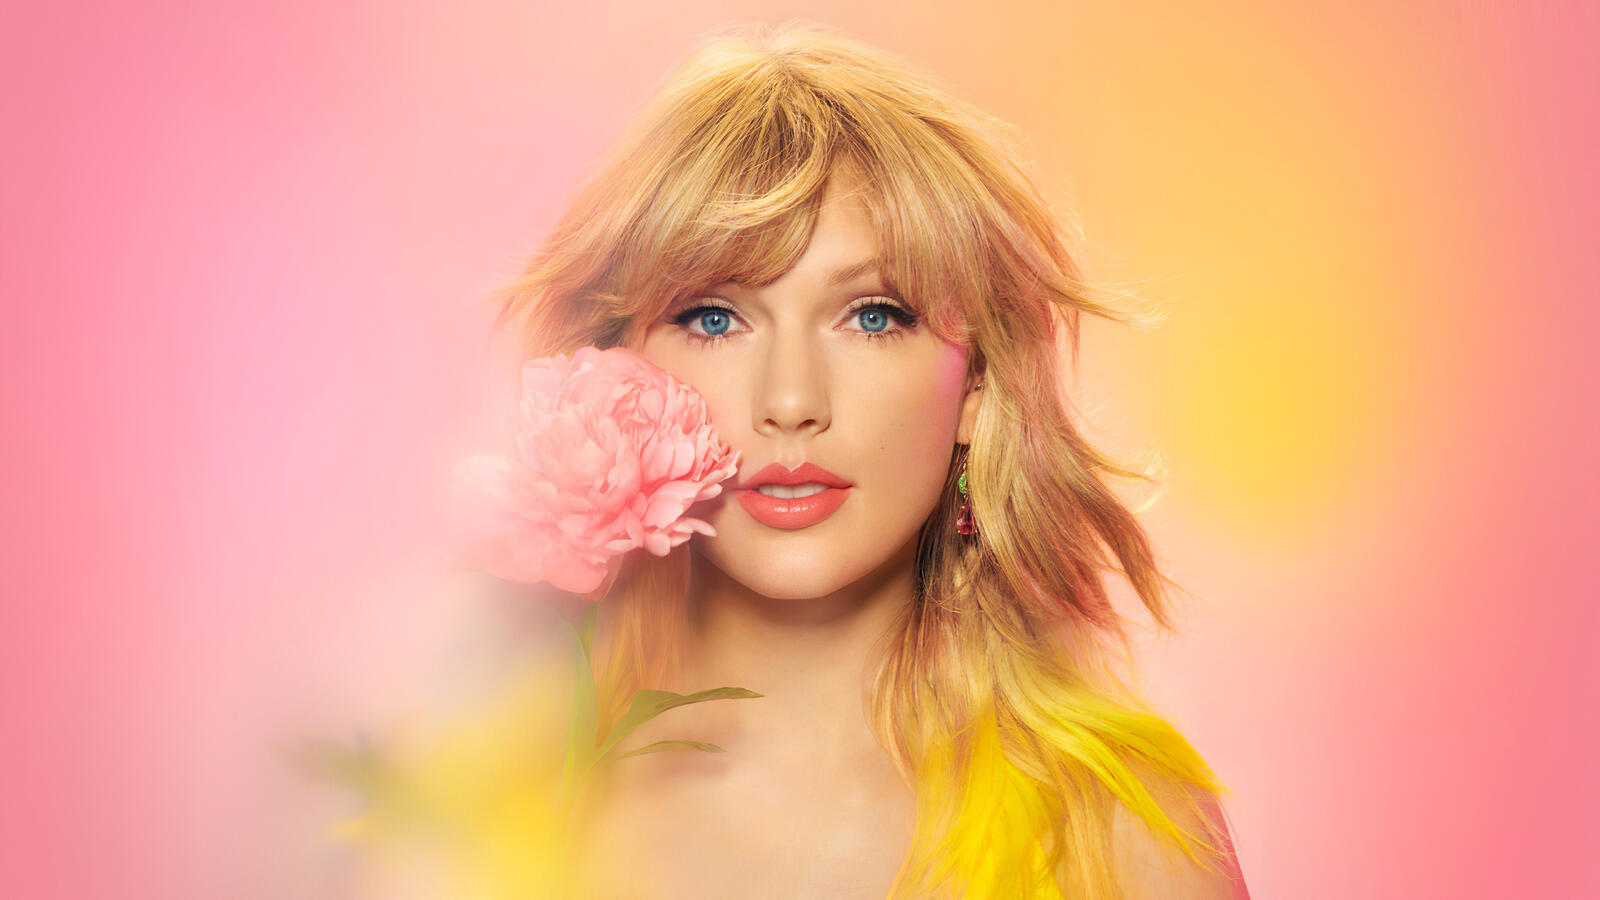 Wallpapers Taylor Swift music celebrities on the desktop